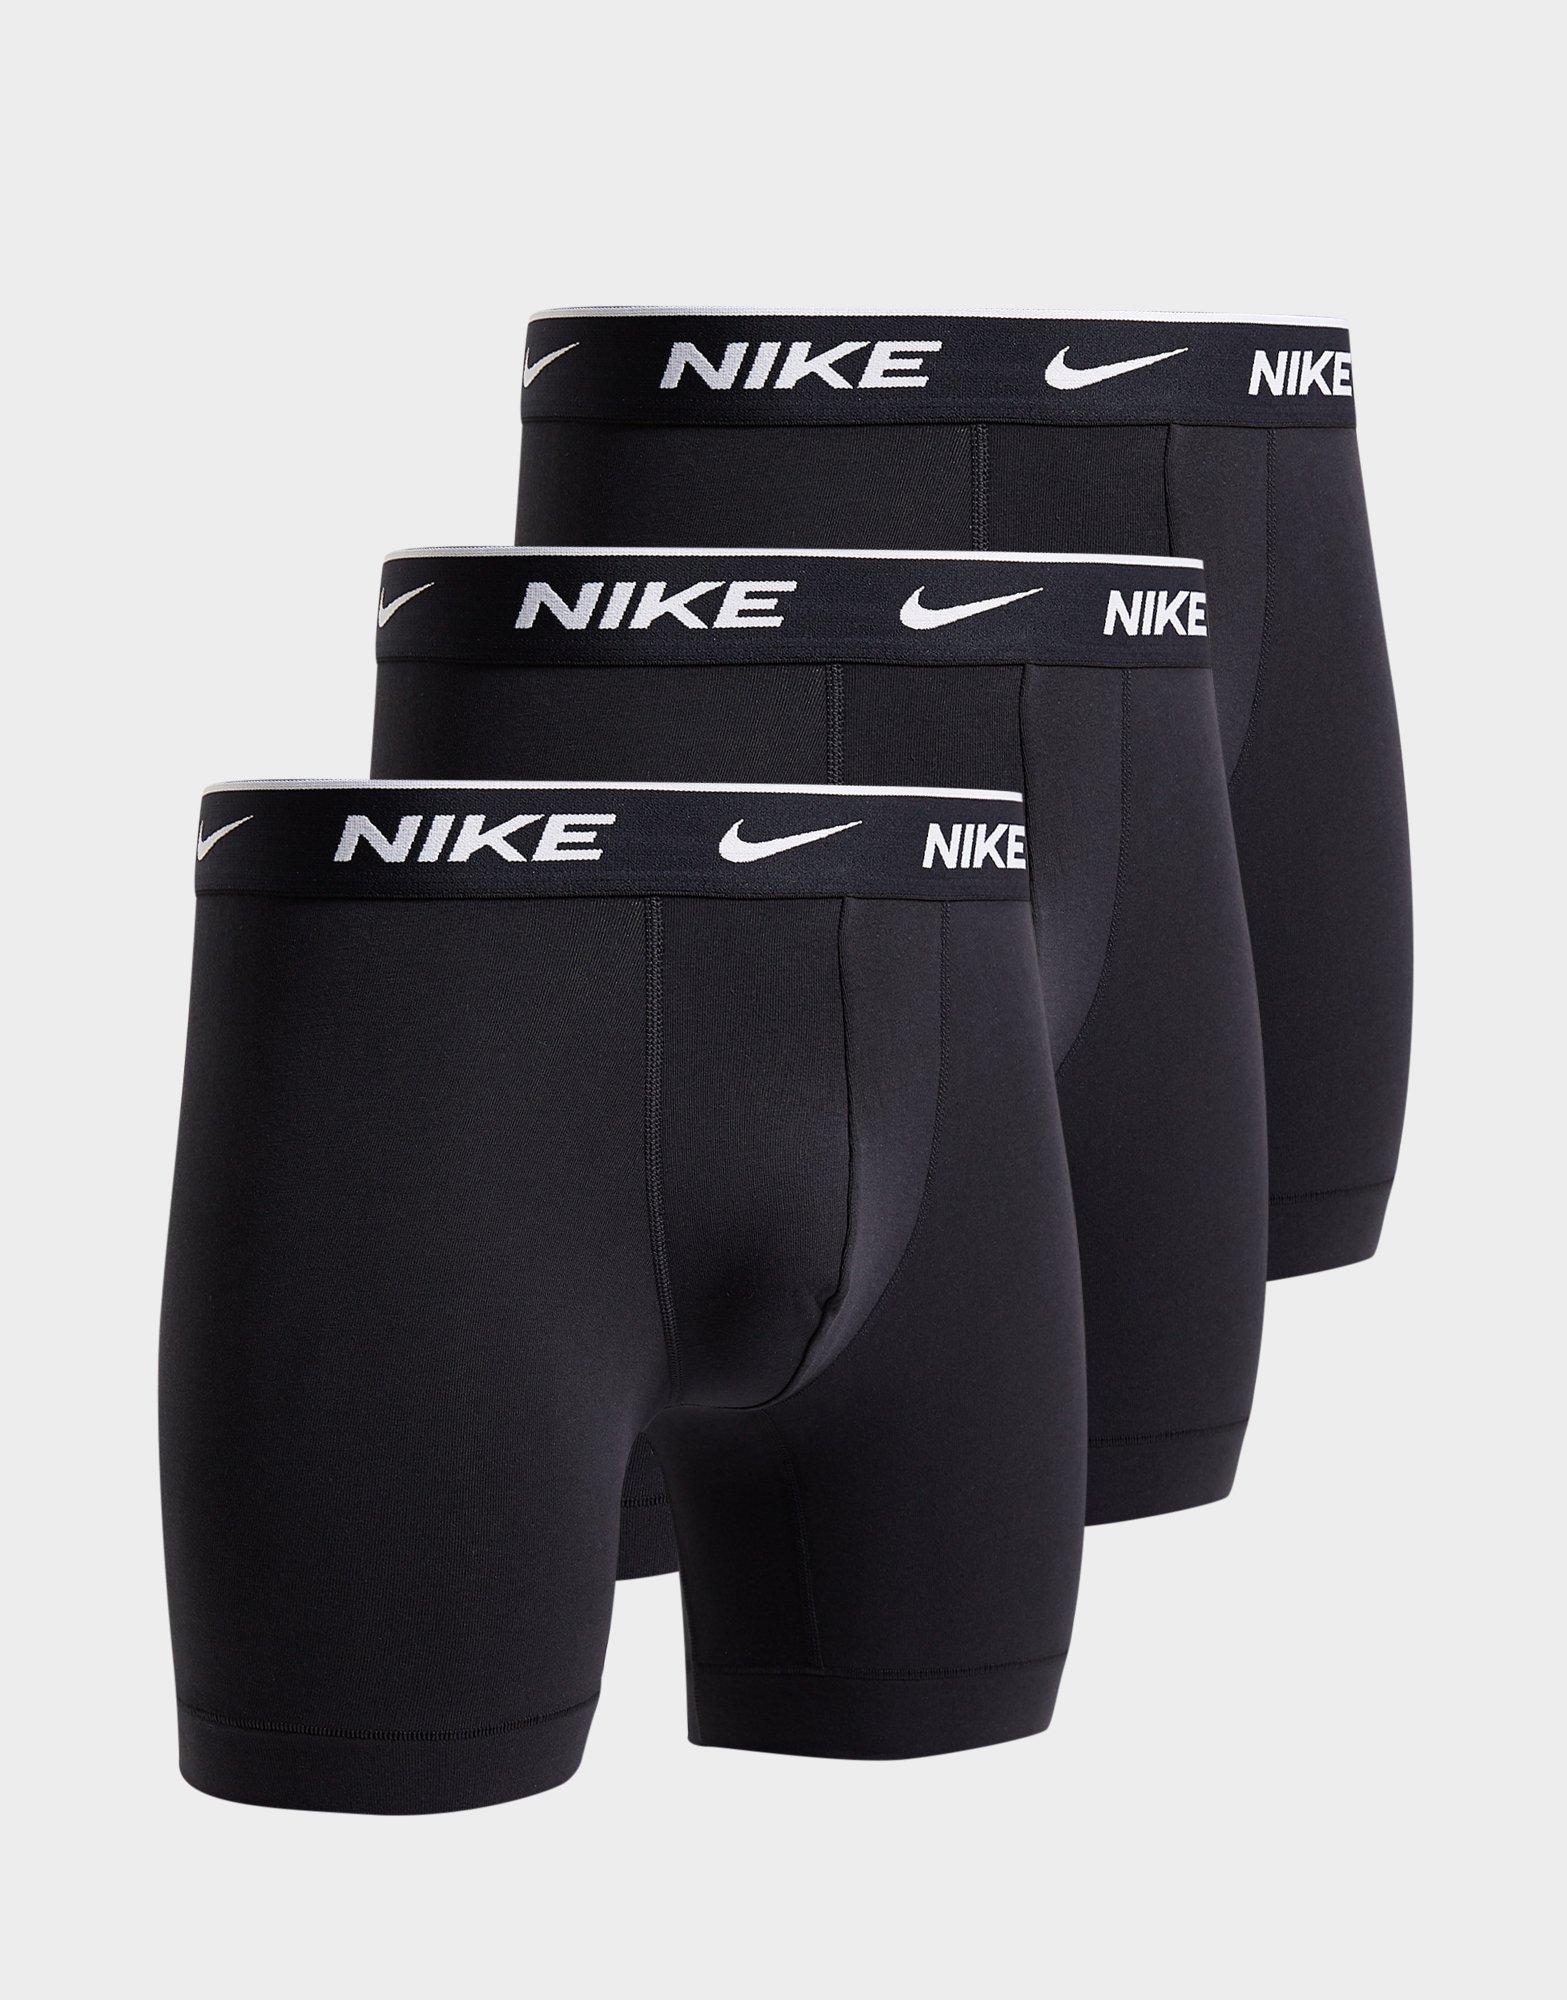 nike long boxers